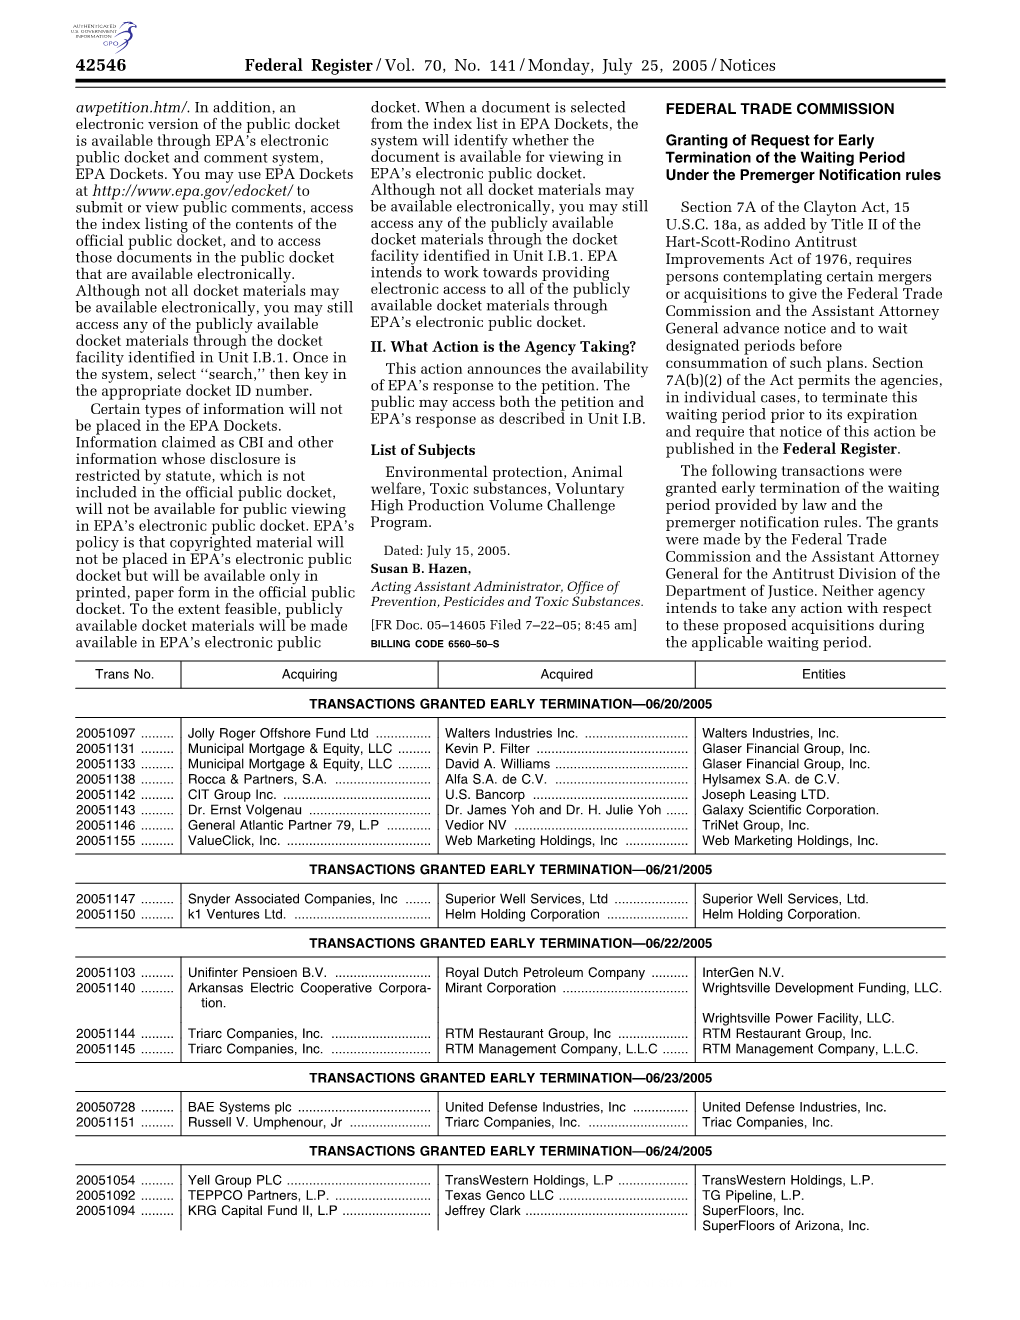 Federal Register/Vol. 70, No. 141/Monday, July 25, 2005/Notices